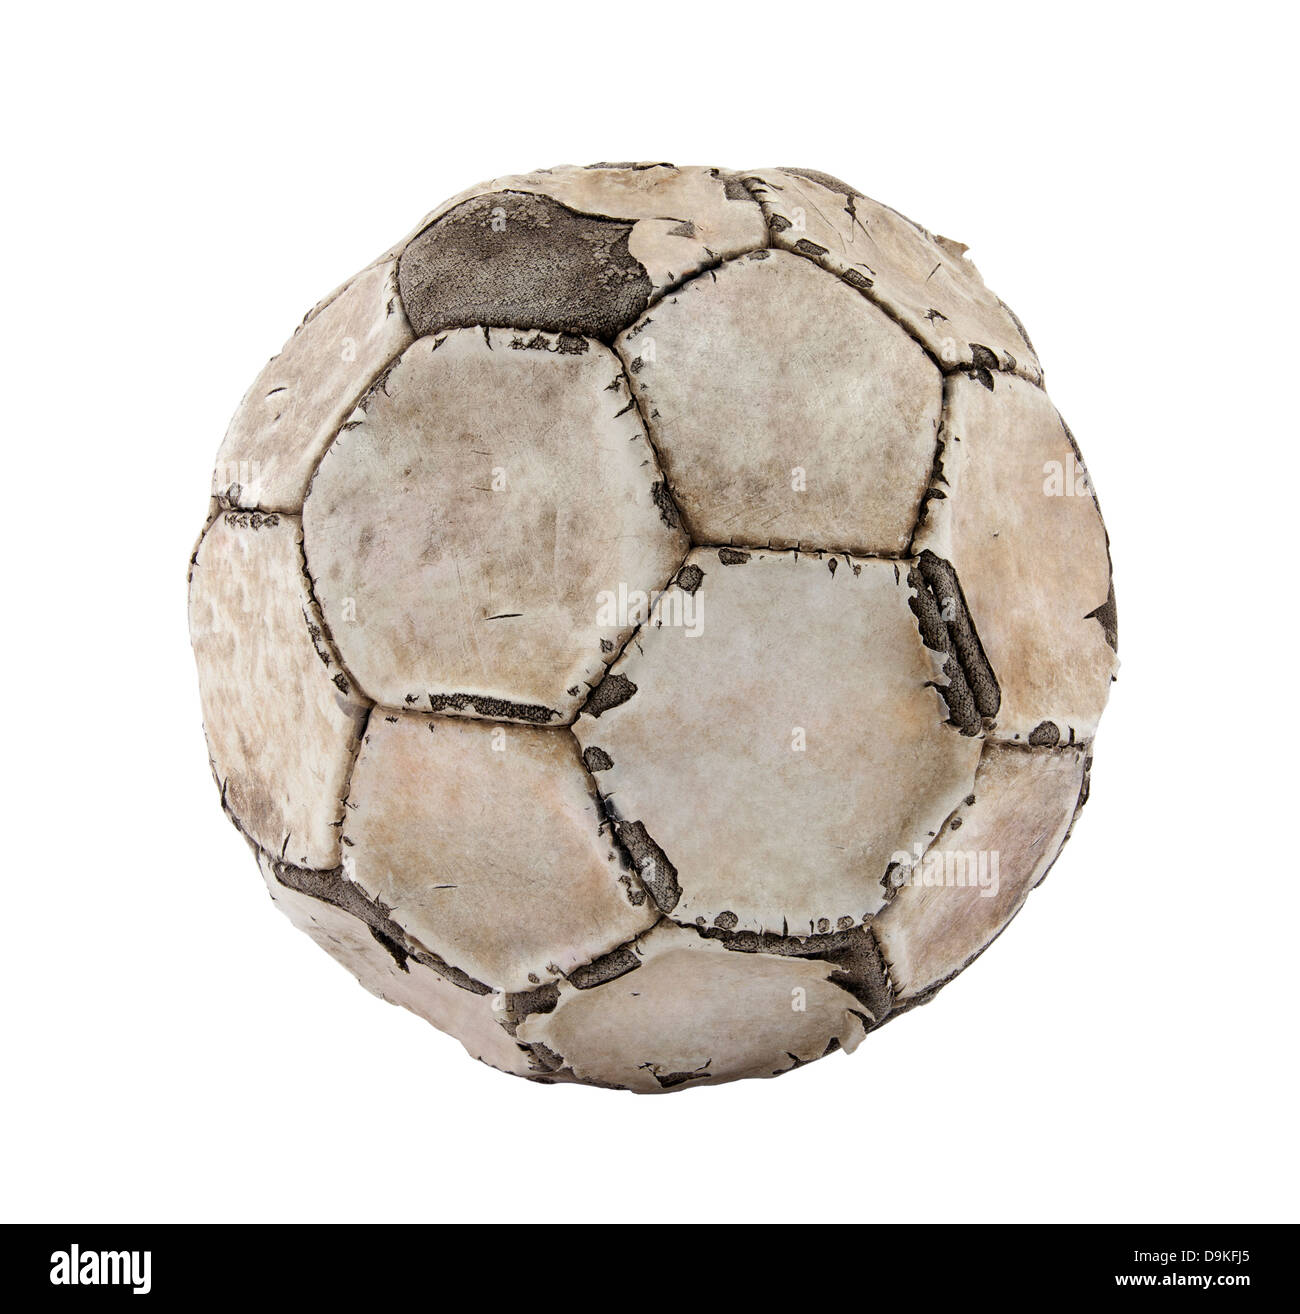 Balón de fútbol antiguo con trazado de recorte Fotografía de stock - Alamy